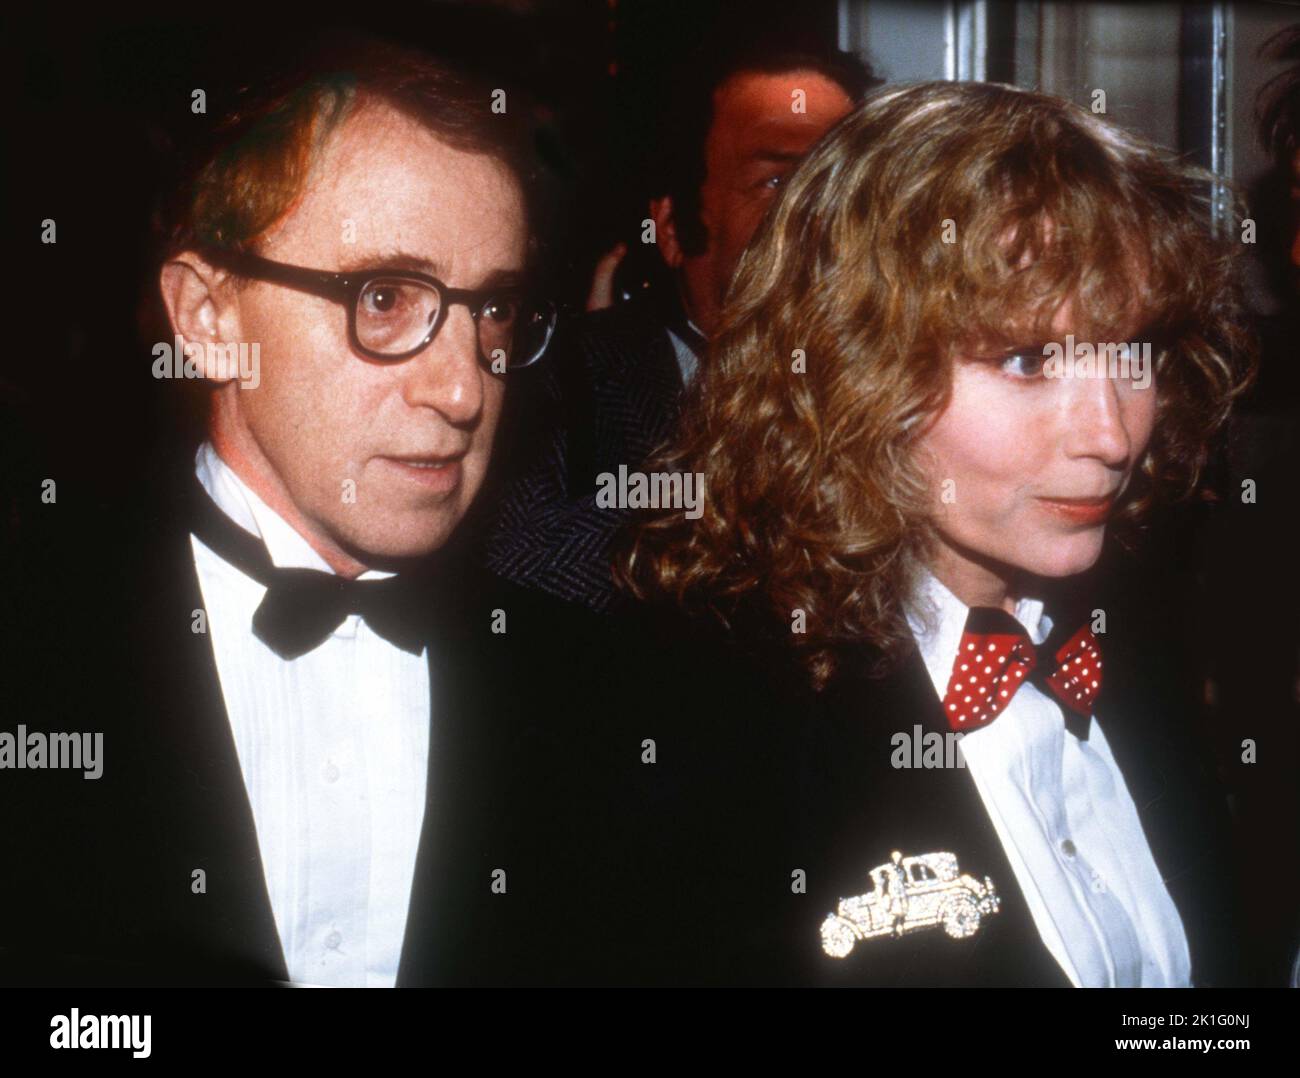 **FOTO FILE** Woody Allen si ritira da Filmmaking. Woody Allen mia Farrow 1983 Foto di John Barrett/PHOTOlink.net / MediaPunch Foto Stock